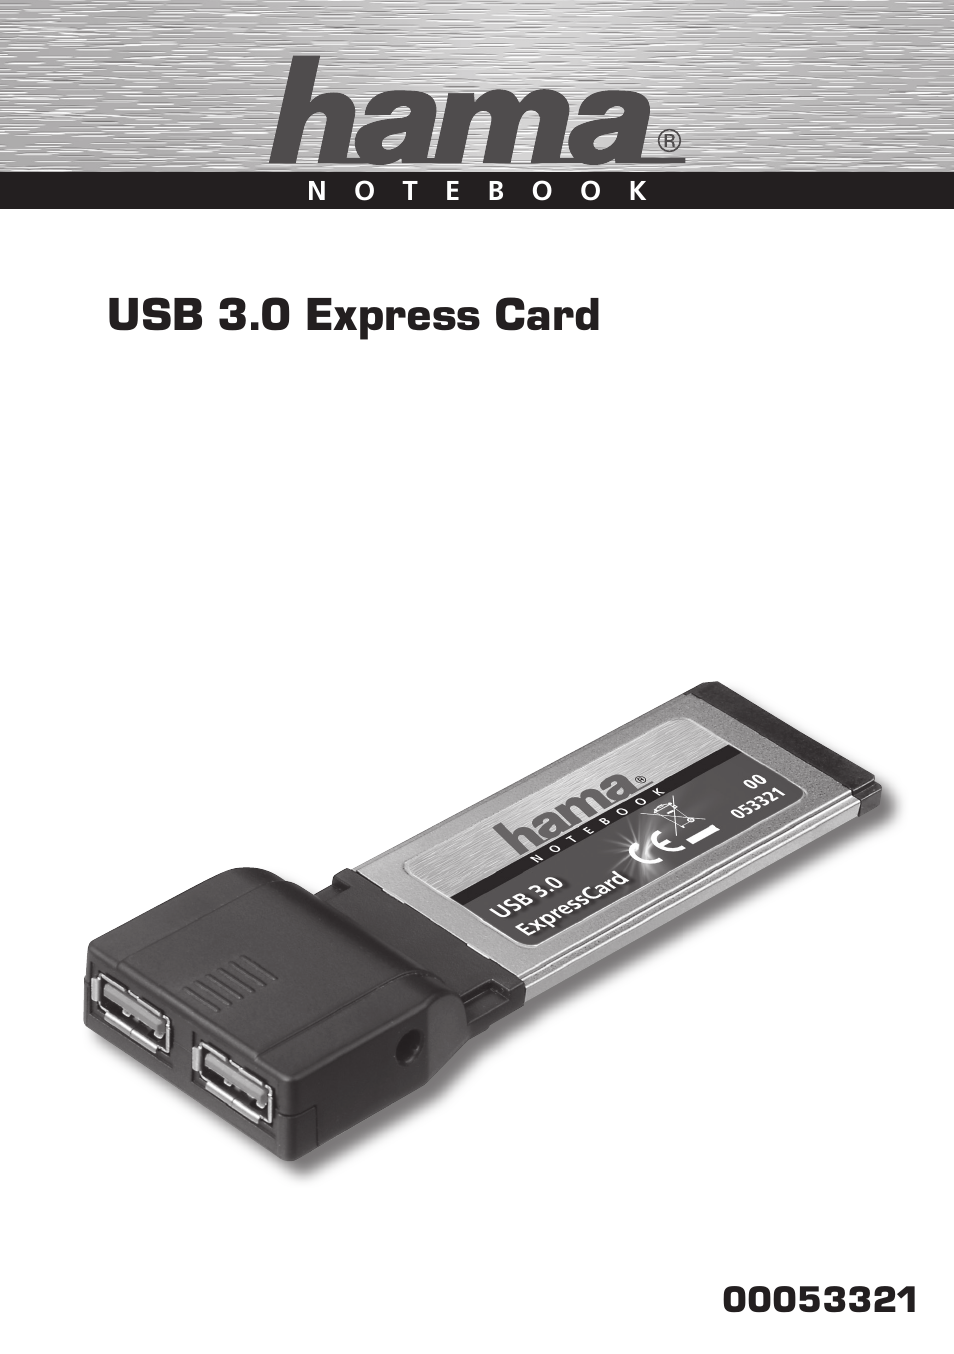 ExpressCard USB 3.0